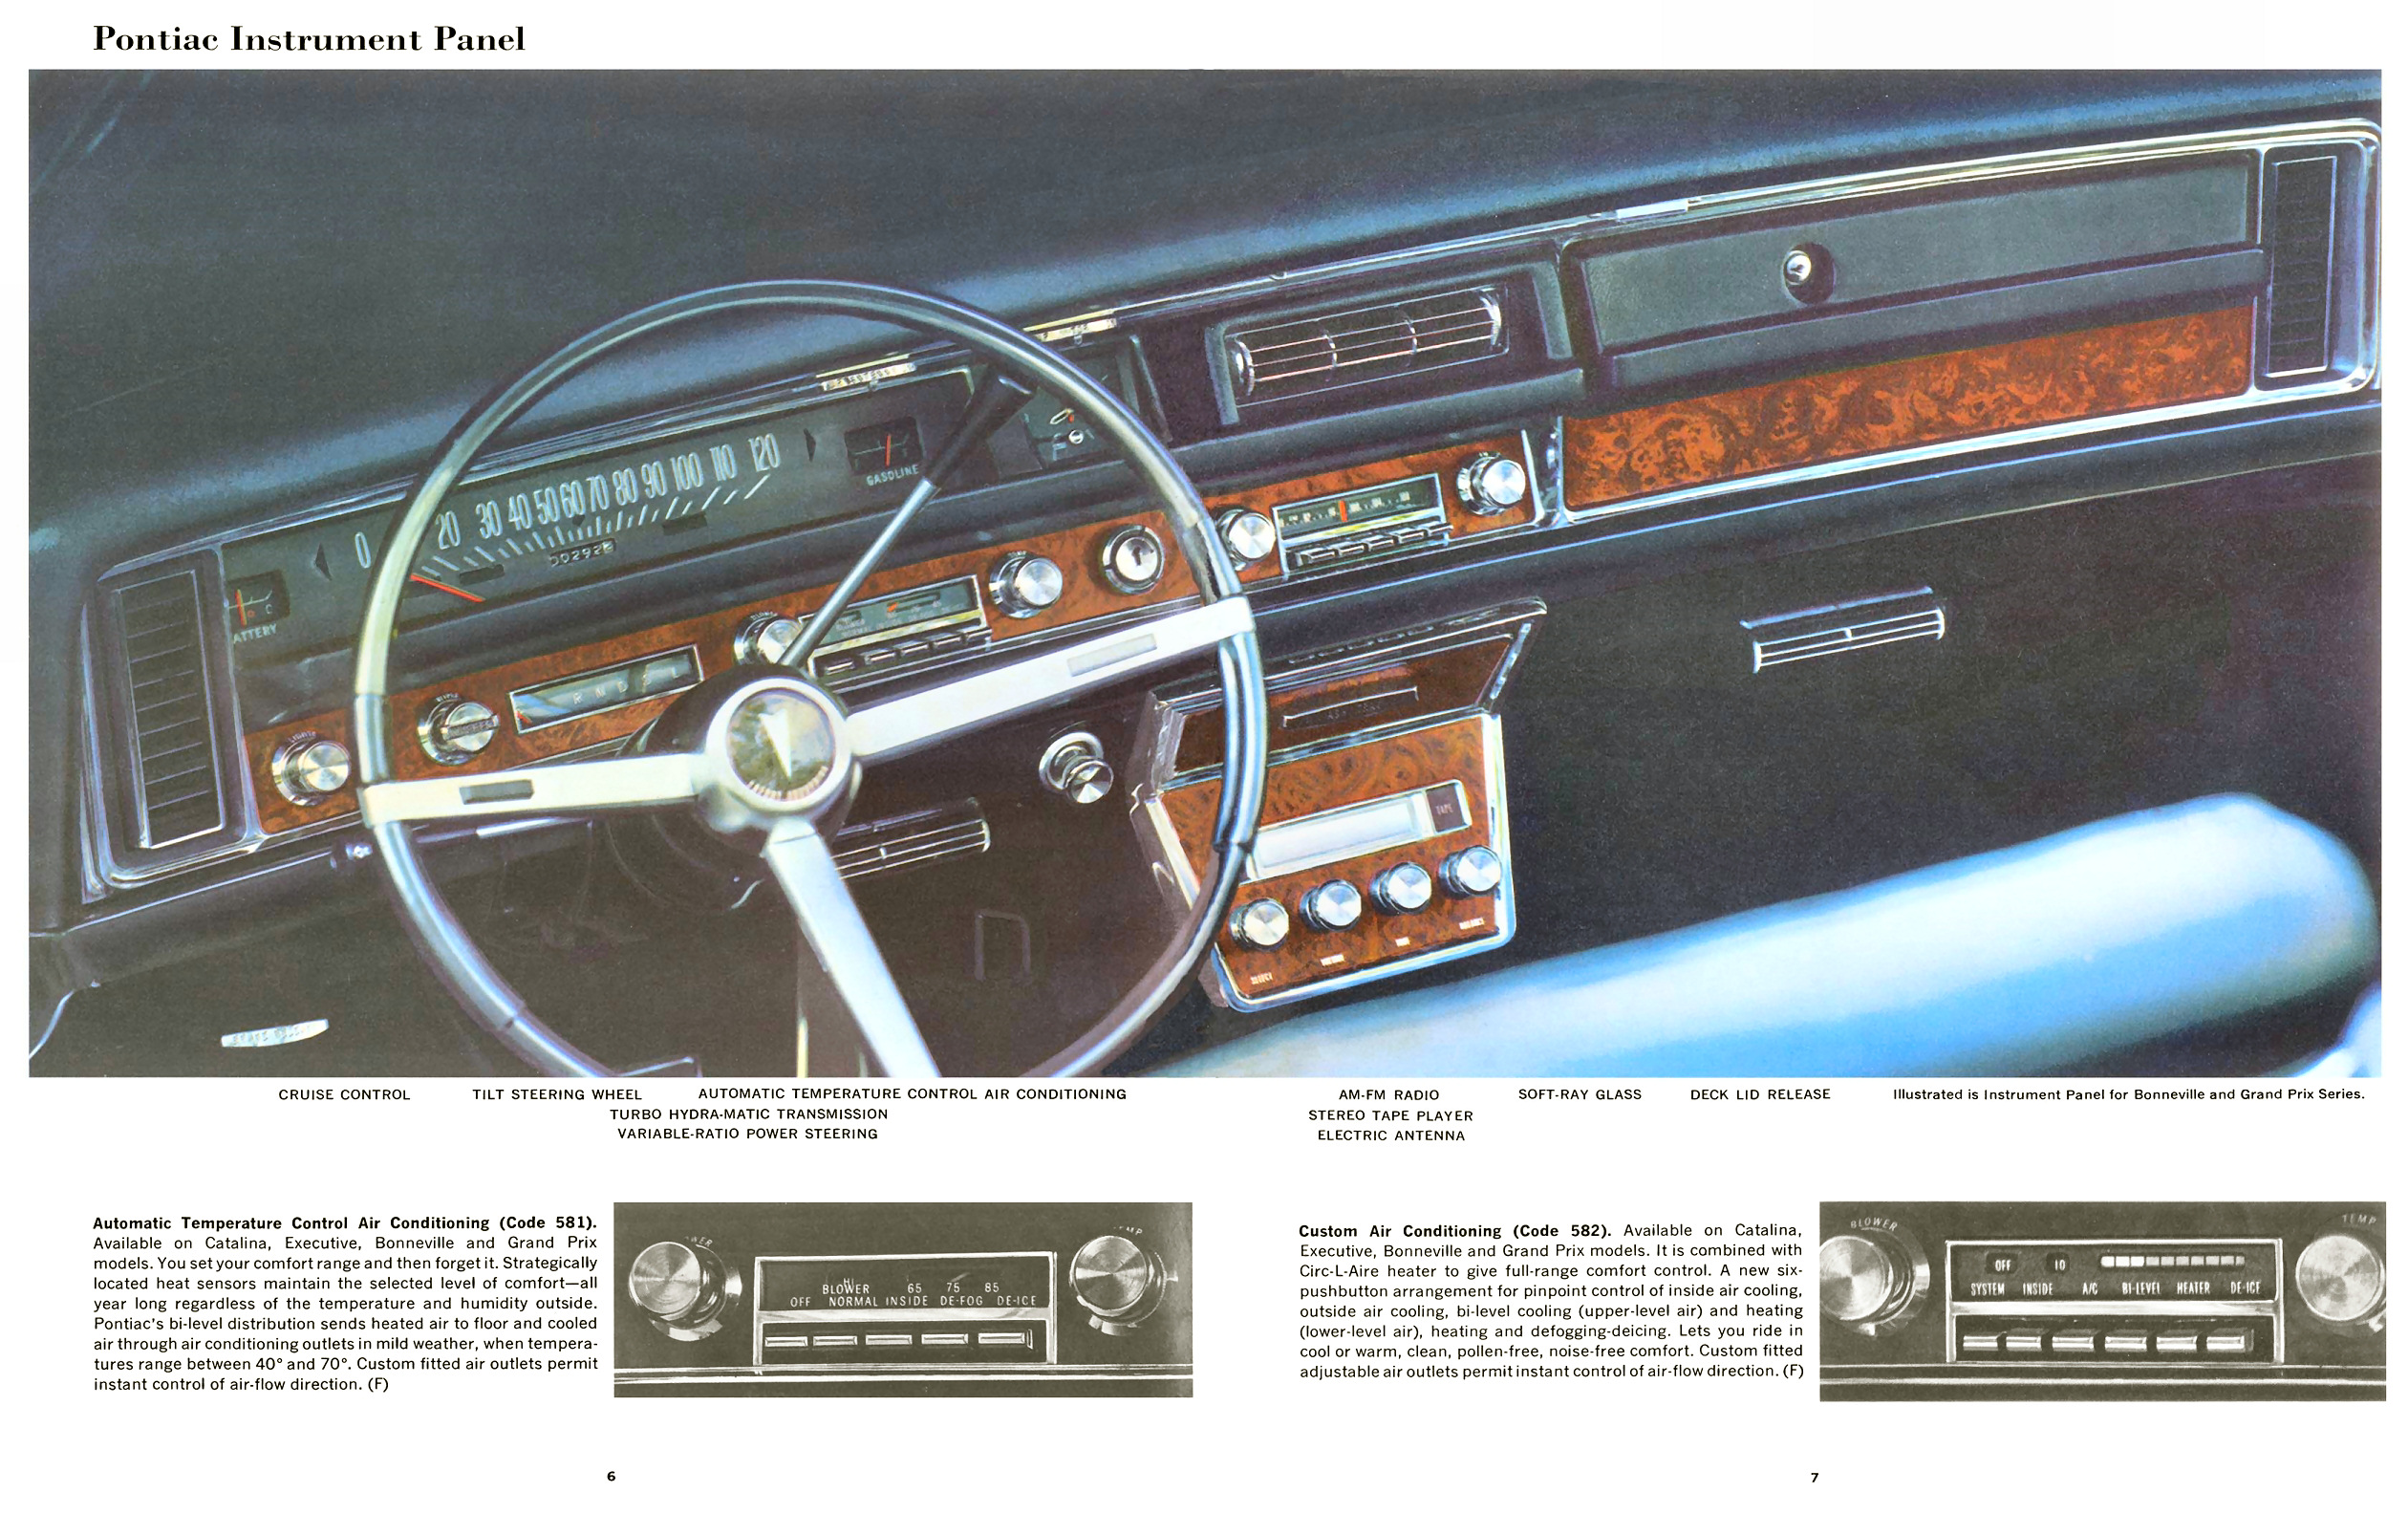 1968_Pontiac_Accessories-06-07